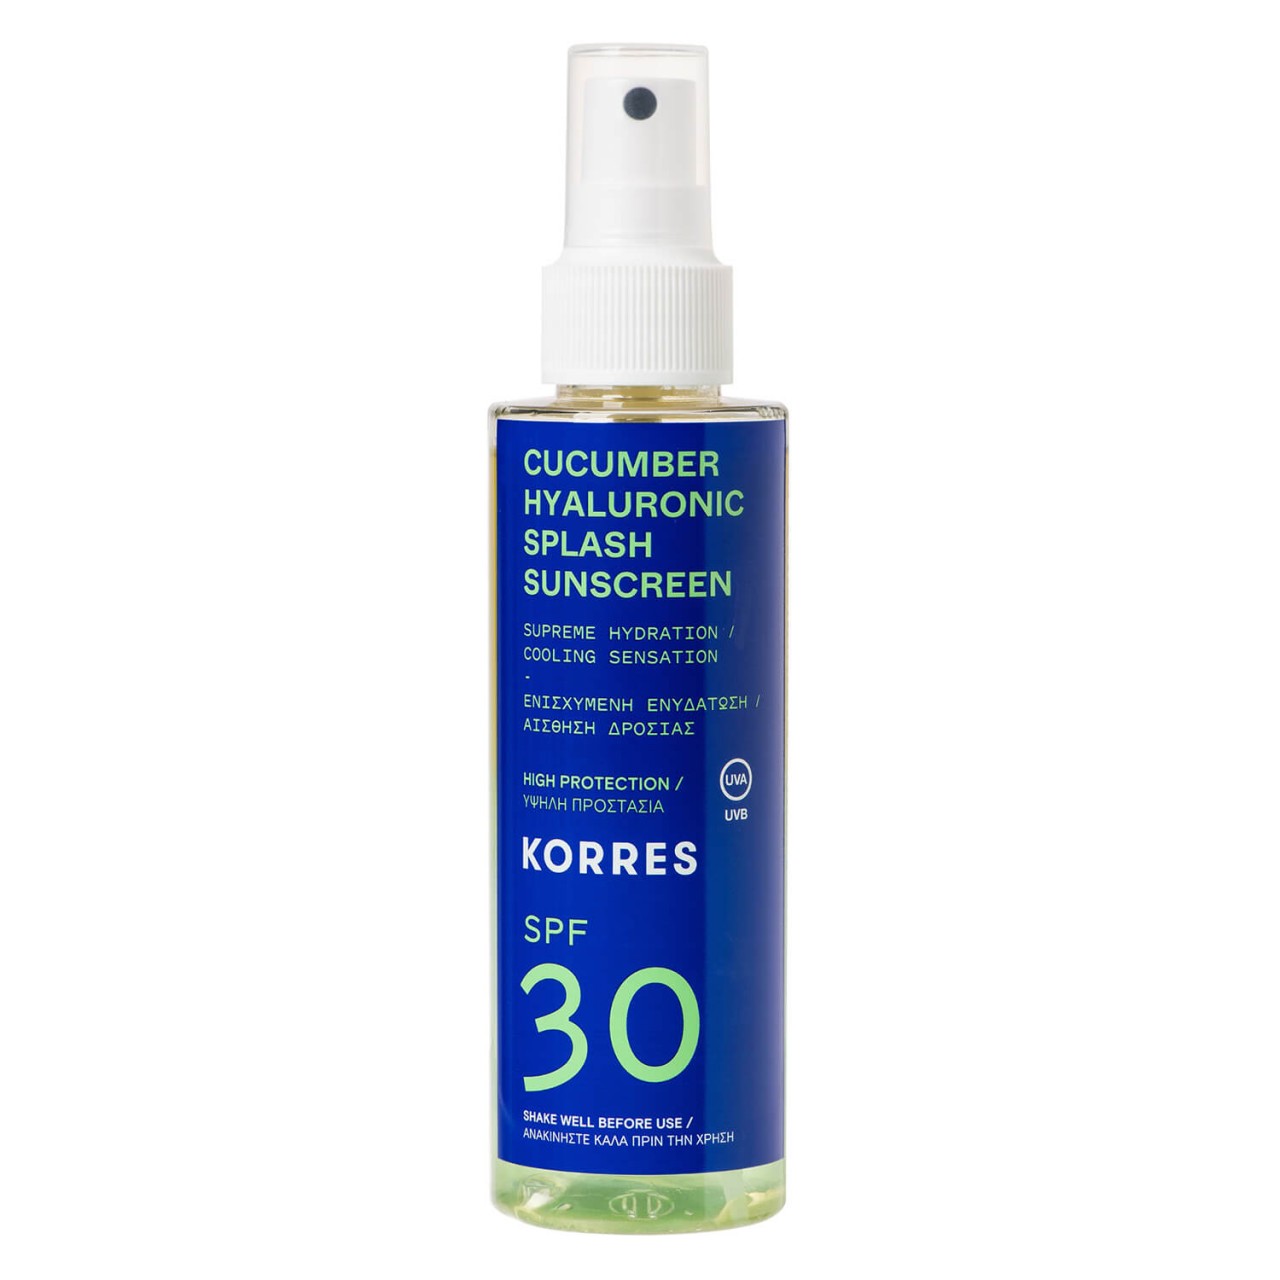 Korres Care - Cucumber Hyaluronic Splash Sunscreen SPF30 von Korres